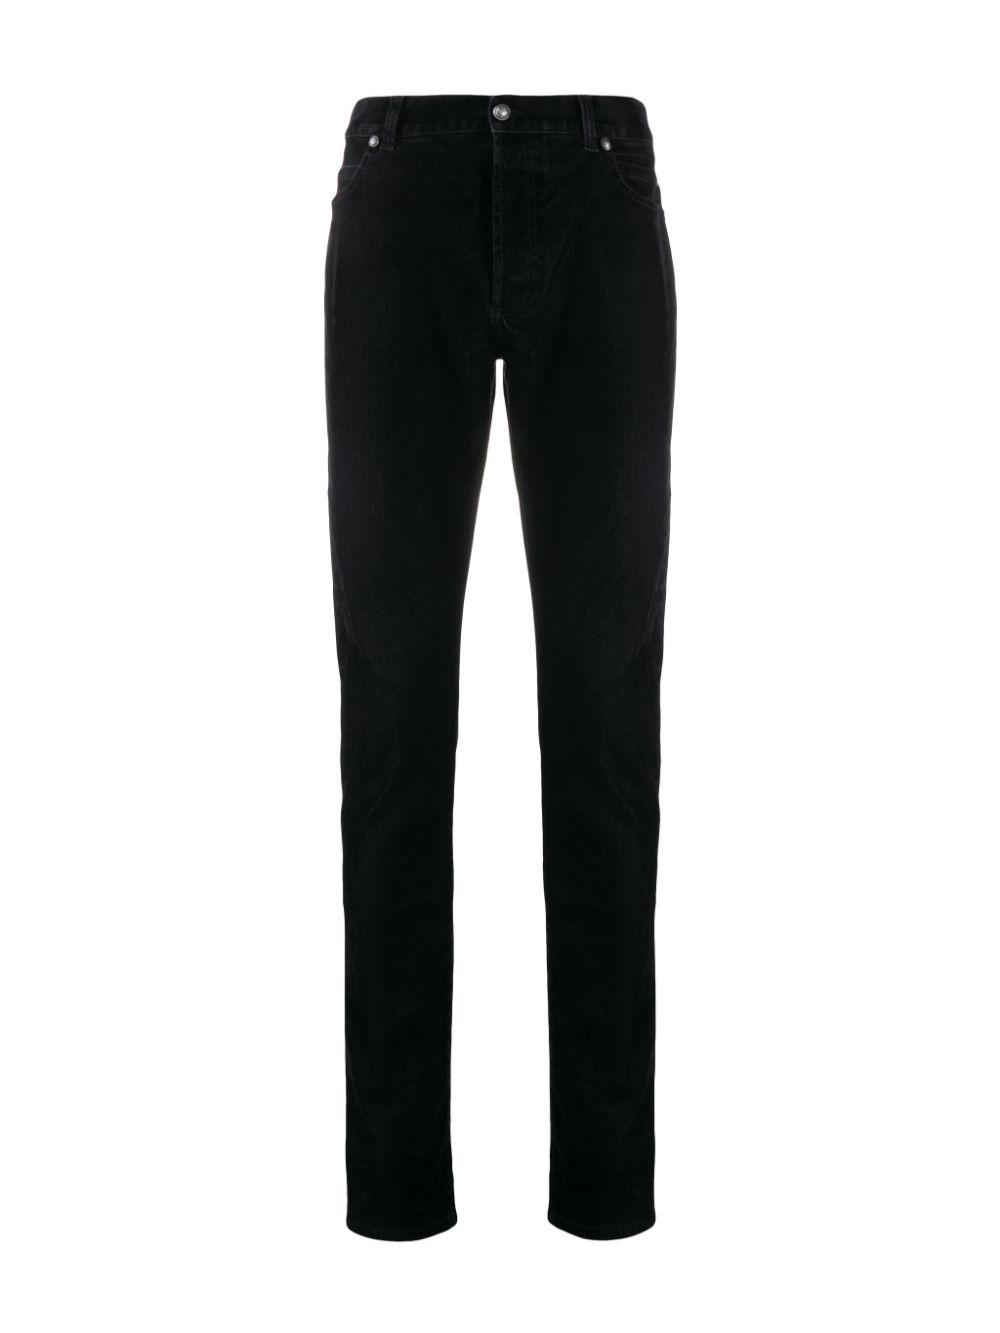 Balmain Denim Slim Fit Jeans in Black for Men - Lyst